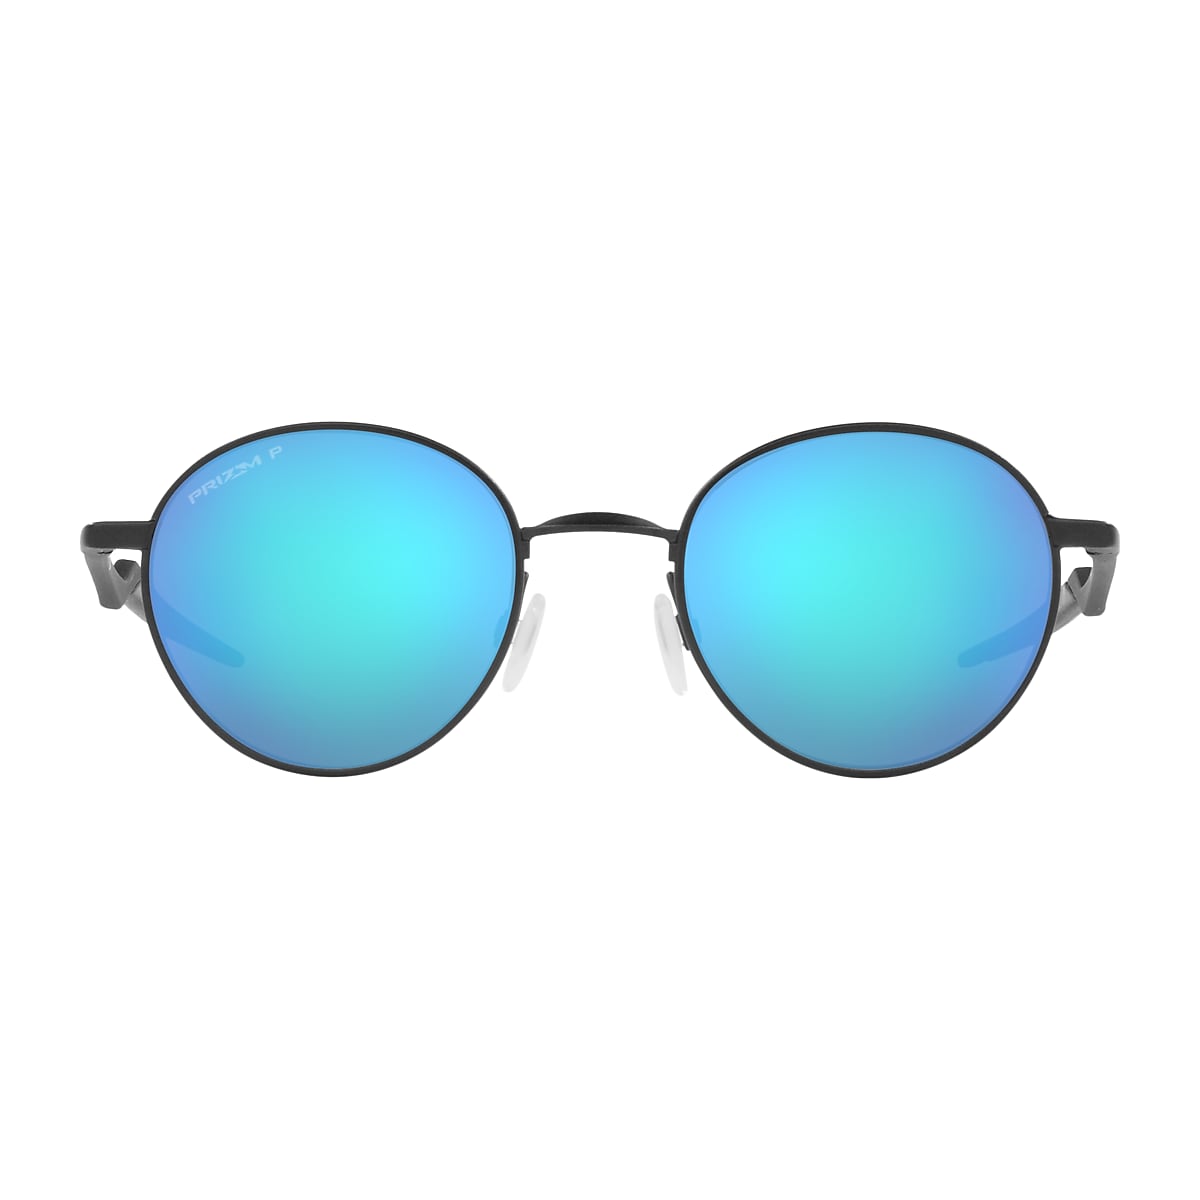 Oakley Men's Terrigal Sunglasses